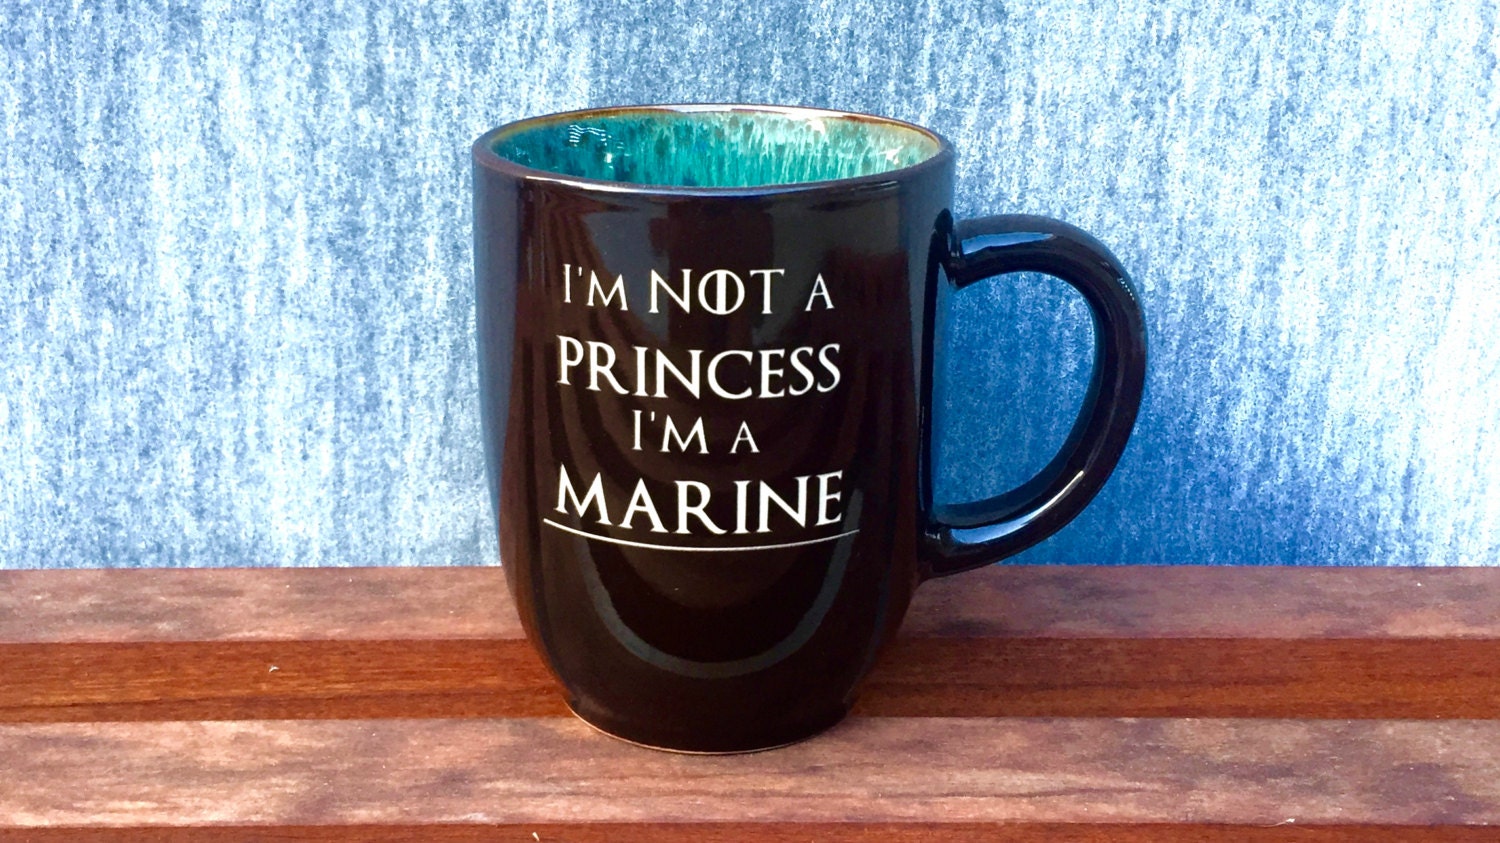 Game of Thrones Coffee Mug with a Patriotic Twist, I'm not a Princess I'm a Marine